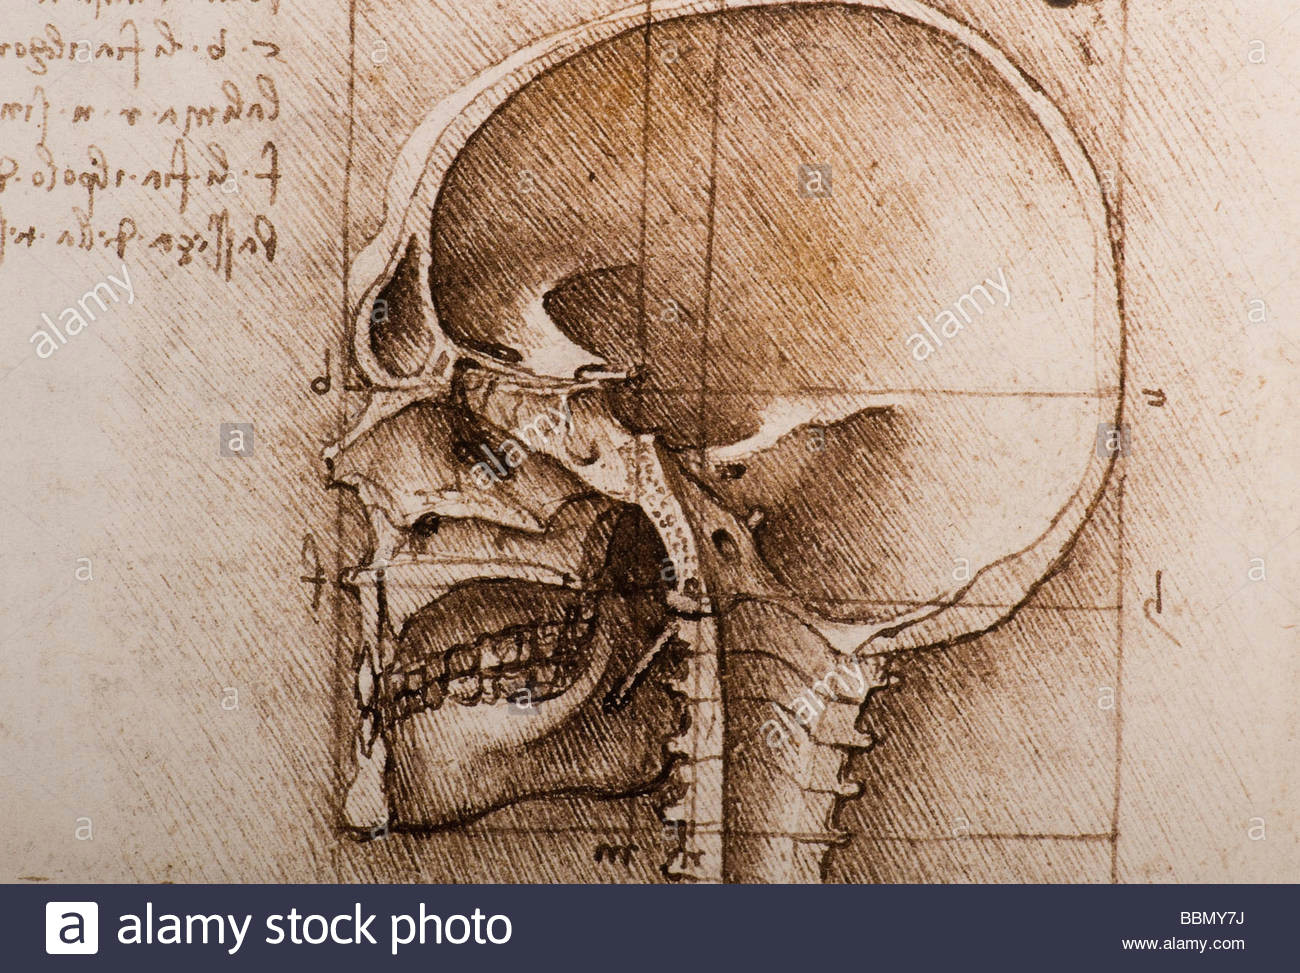 detail anatomical studies of the human skull by leonardo da vinci stock image